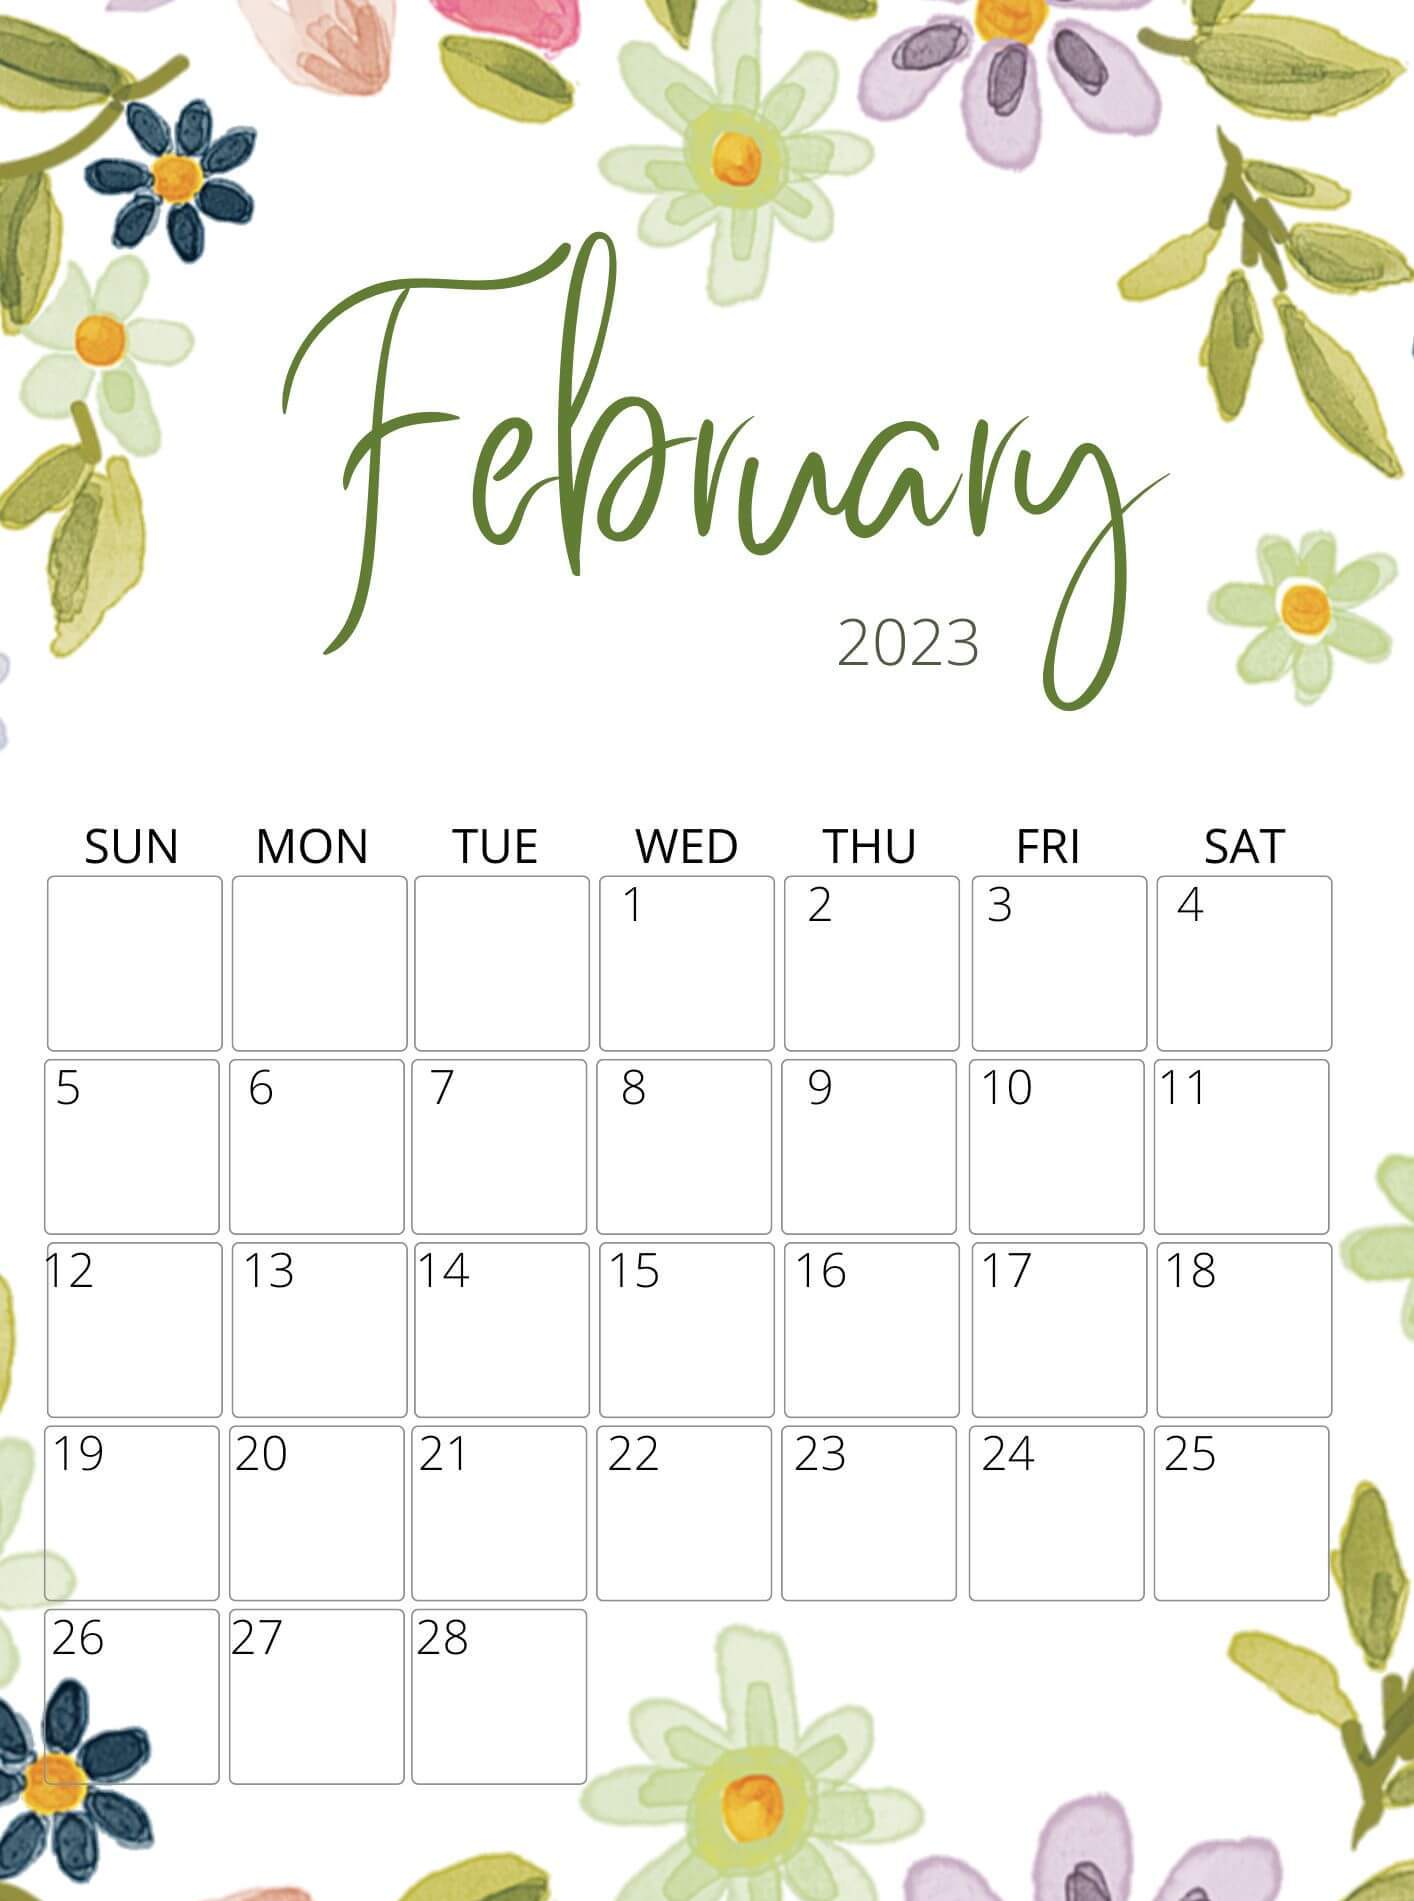 February 2023 Floral Calendar